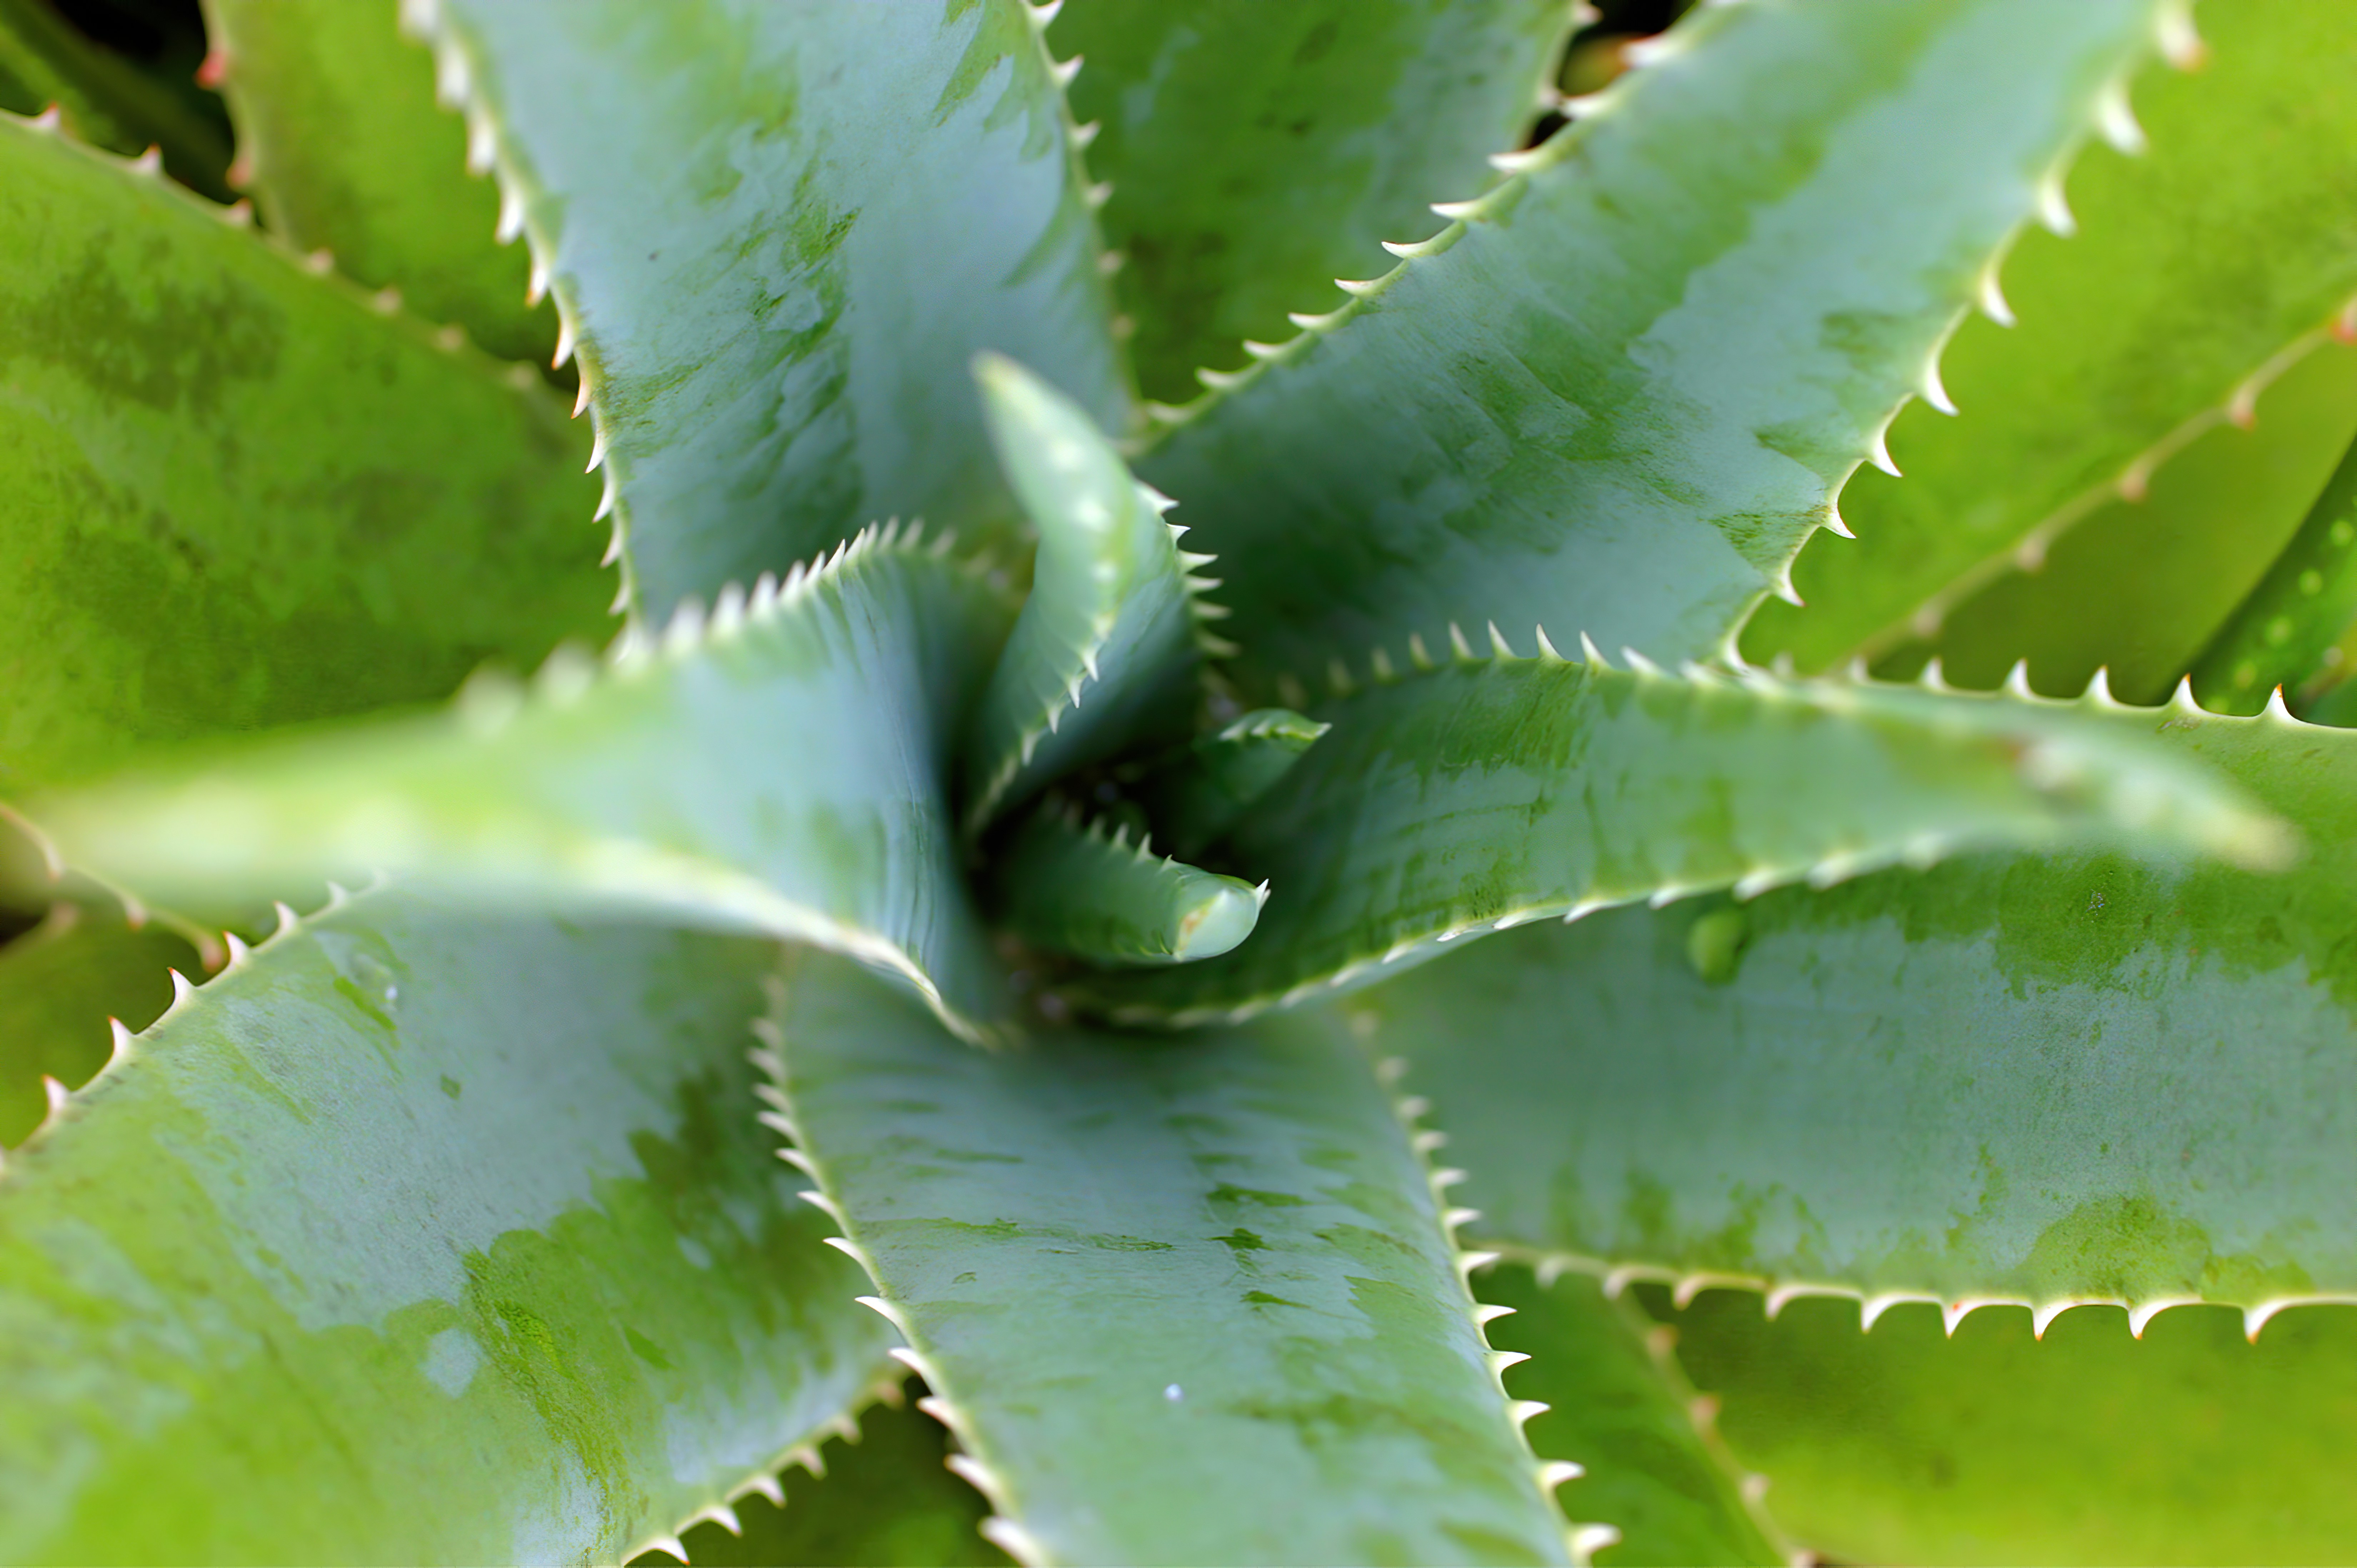 A closeup of an aloe plant